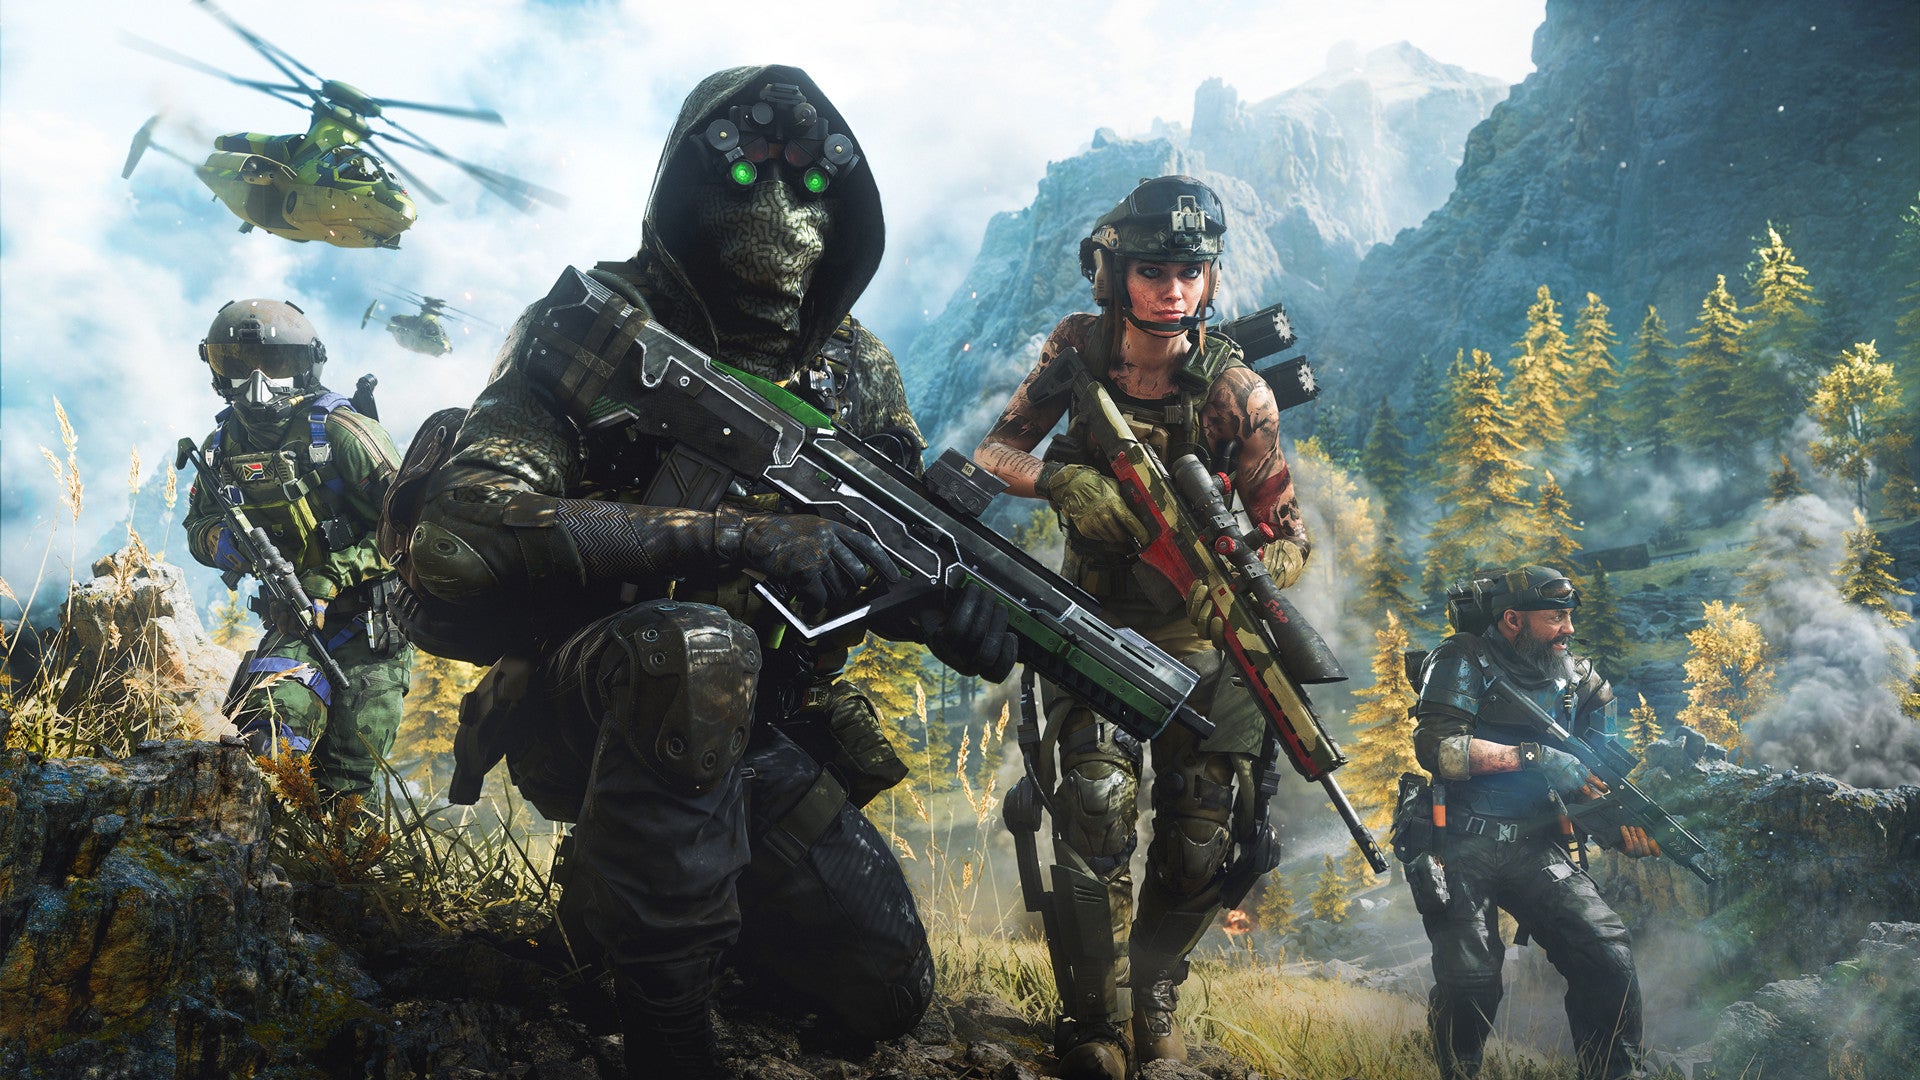 New EA studio to develop narrative campaign set in the Battlefield universe VG247